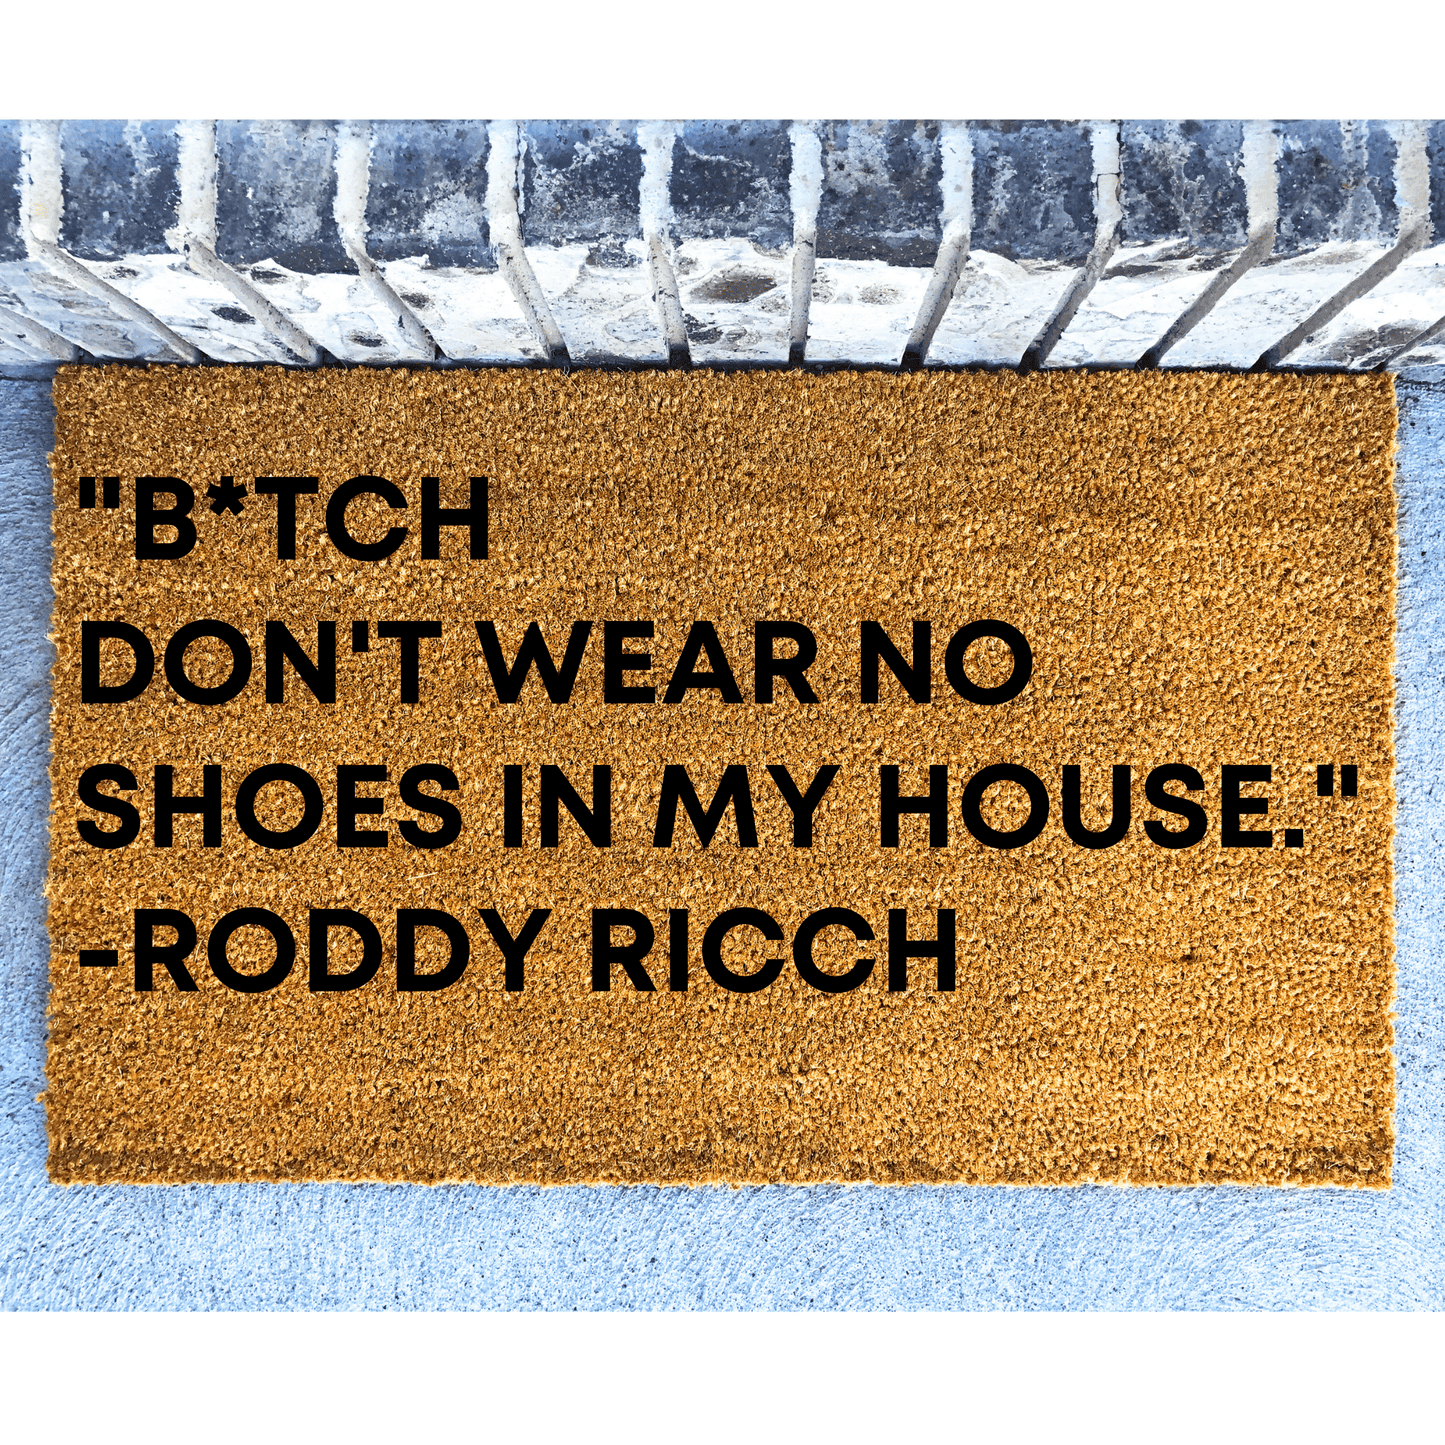 Roddy Ricch doormat - Personalised Doormat Australia